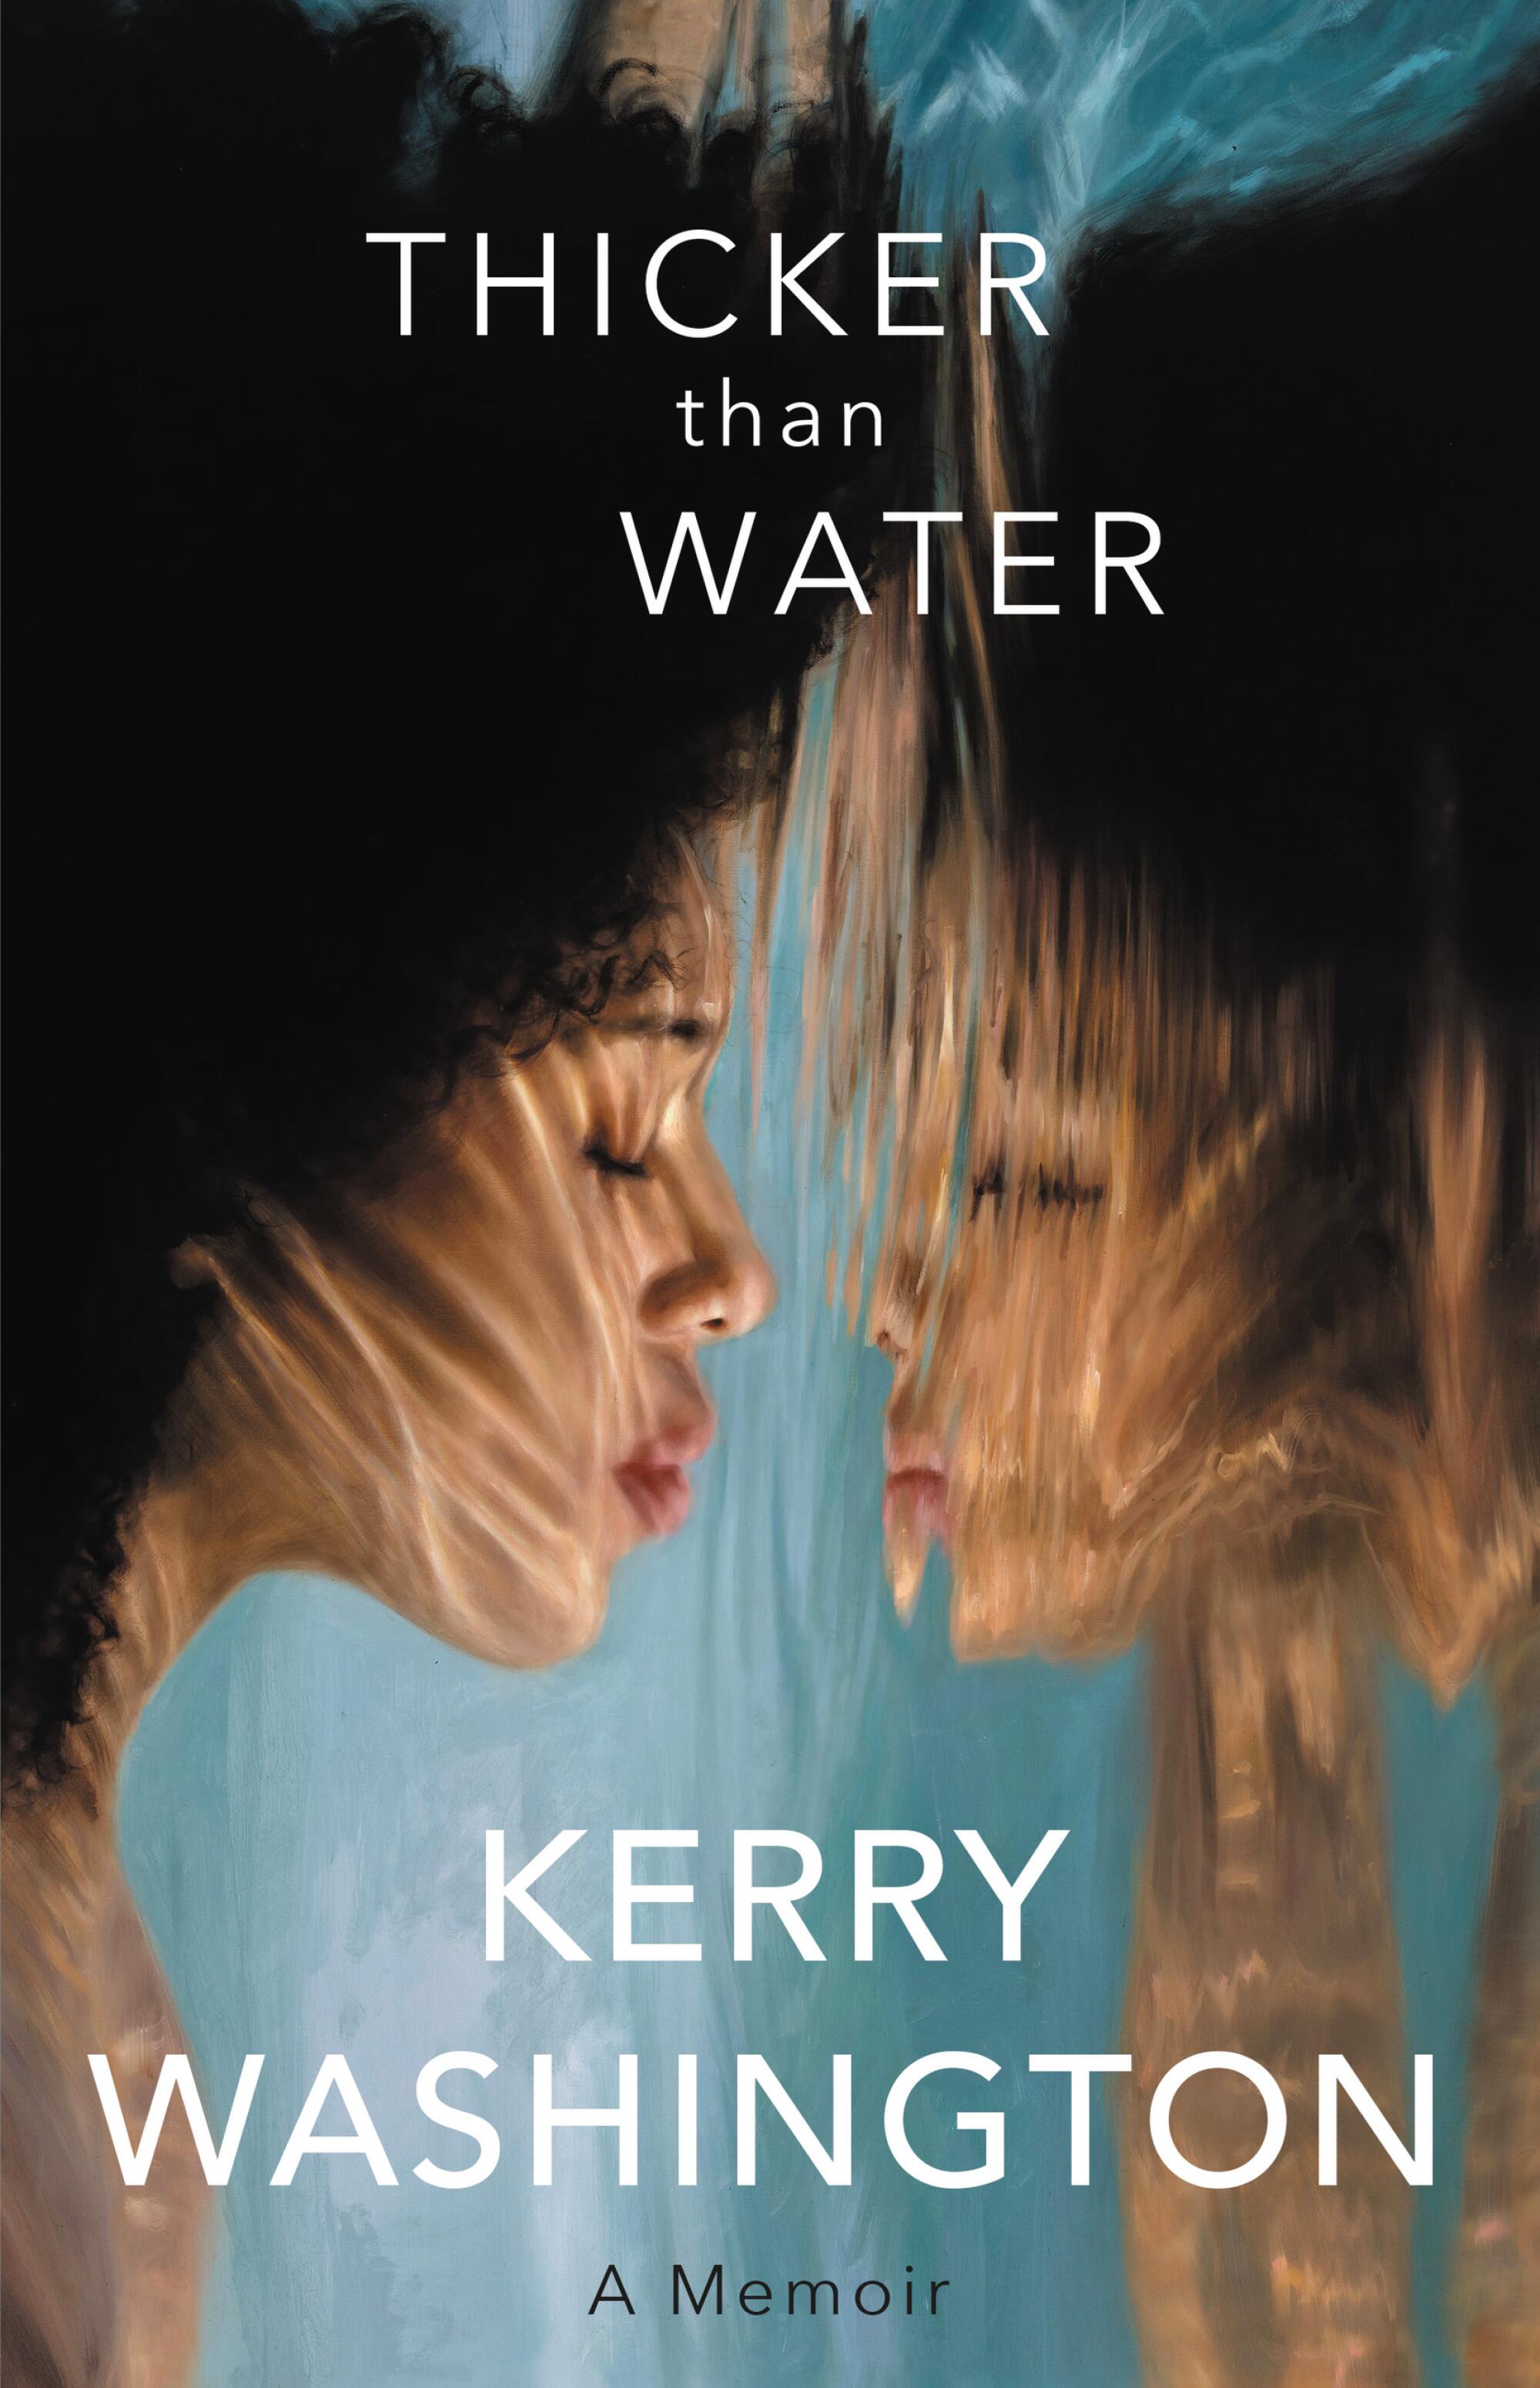 "Thicker Than Water: A Memoir," by Kerry Washington